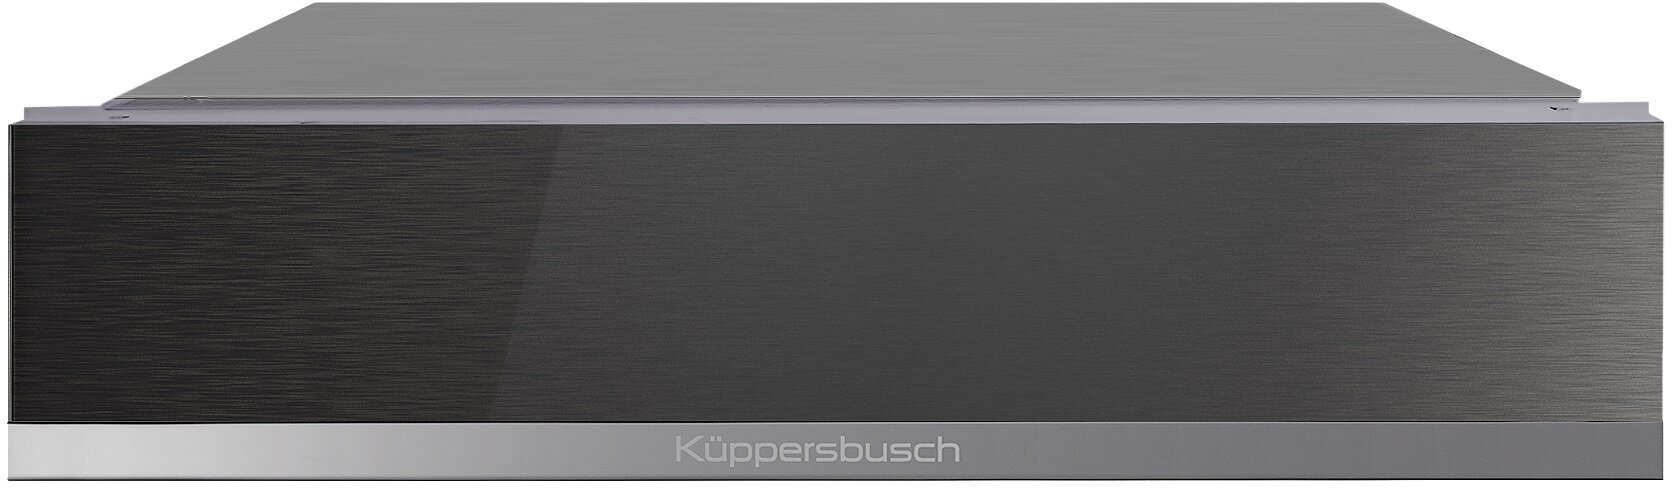 Kuppersbusch CSW 68000 G3 Silver Chrome